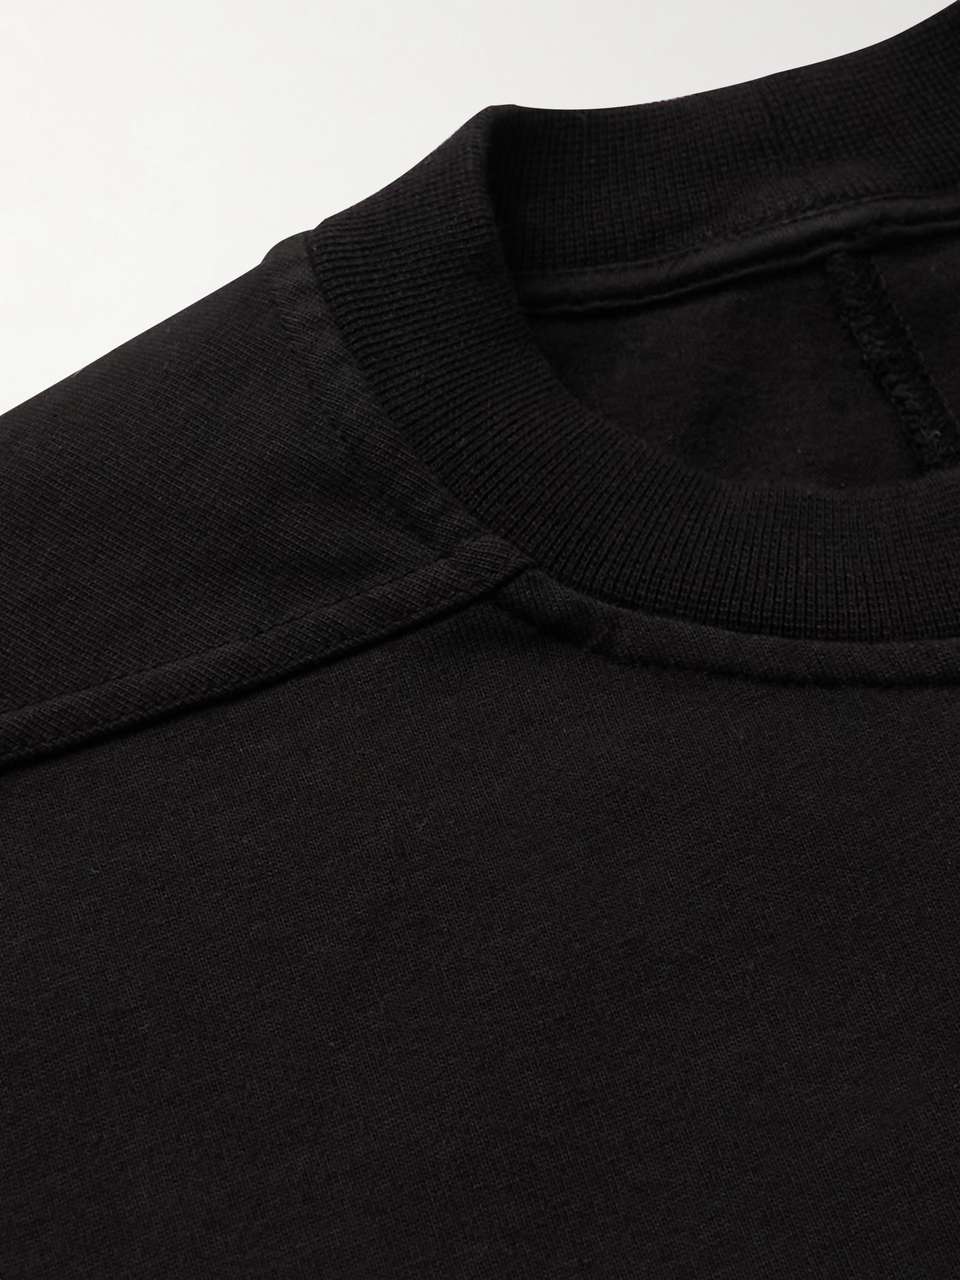 DRKSHDW BY RICK OWENS Printed Cotton-Jersey Sweatshirt for Men | MR PORTER